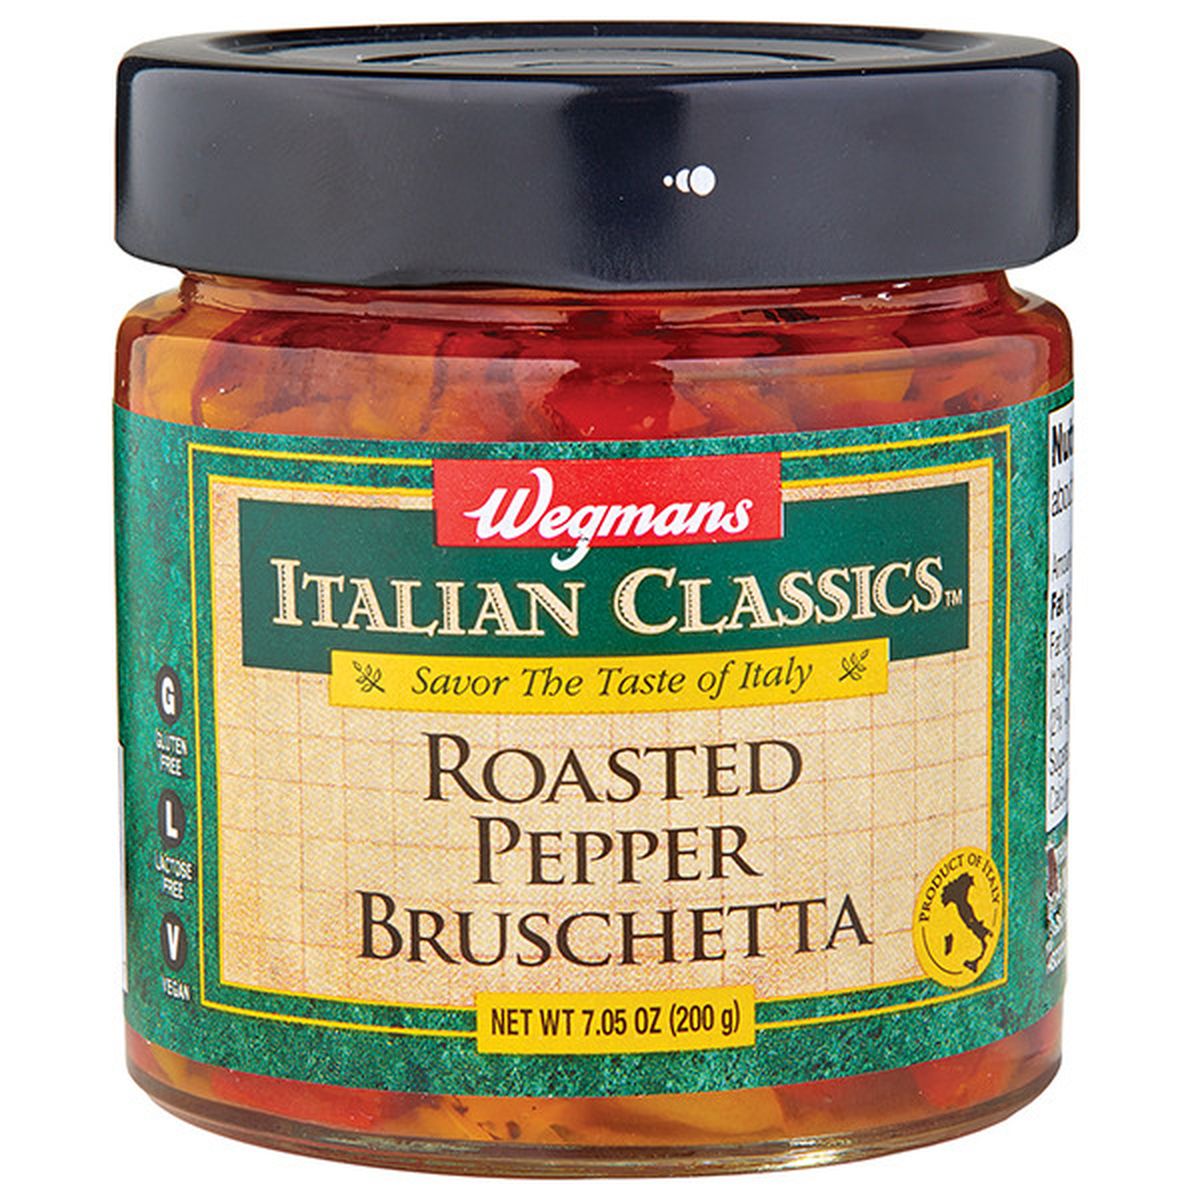 Calories in Wegmans Italian Classics Roasted Pepper Bruschetta